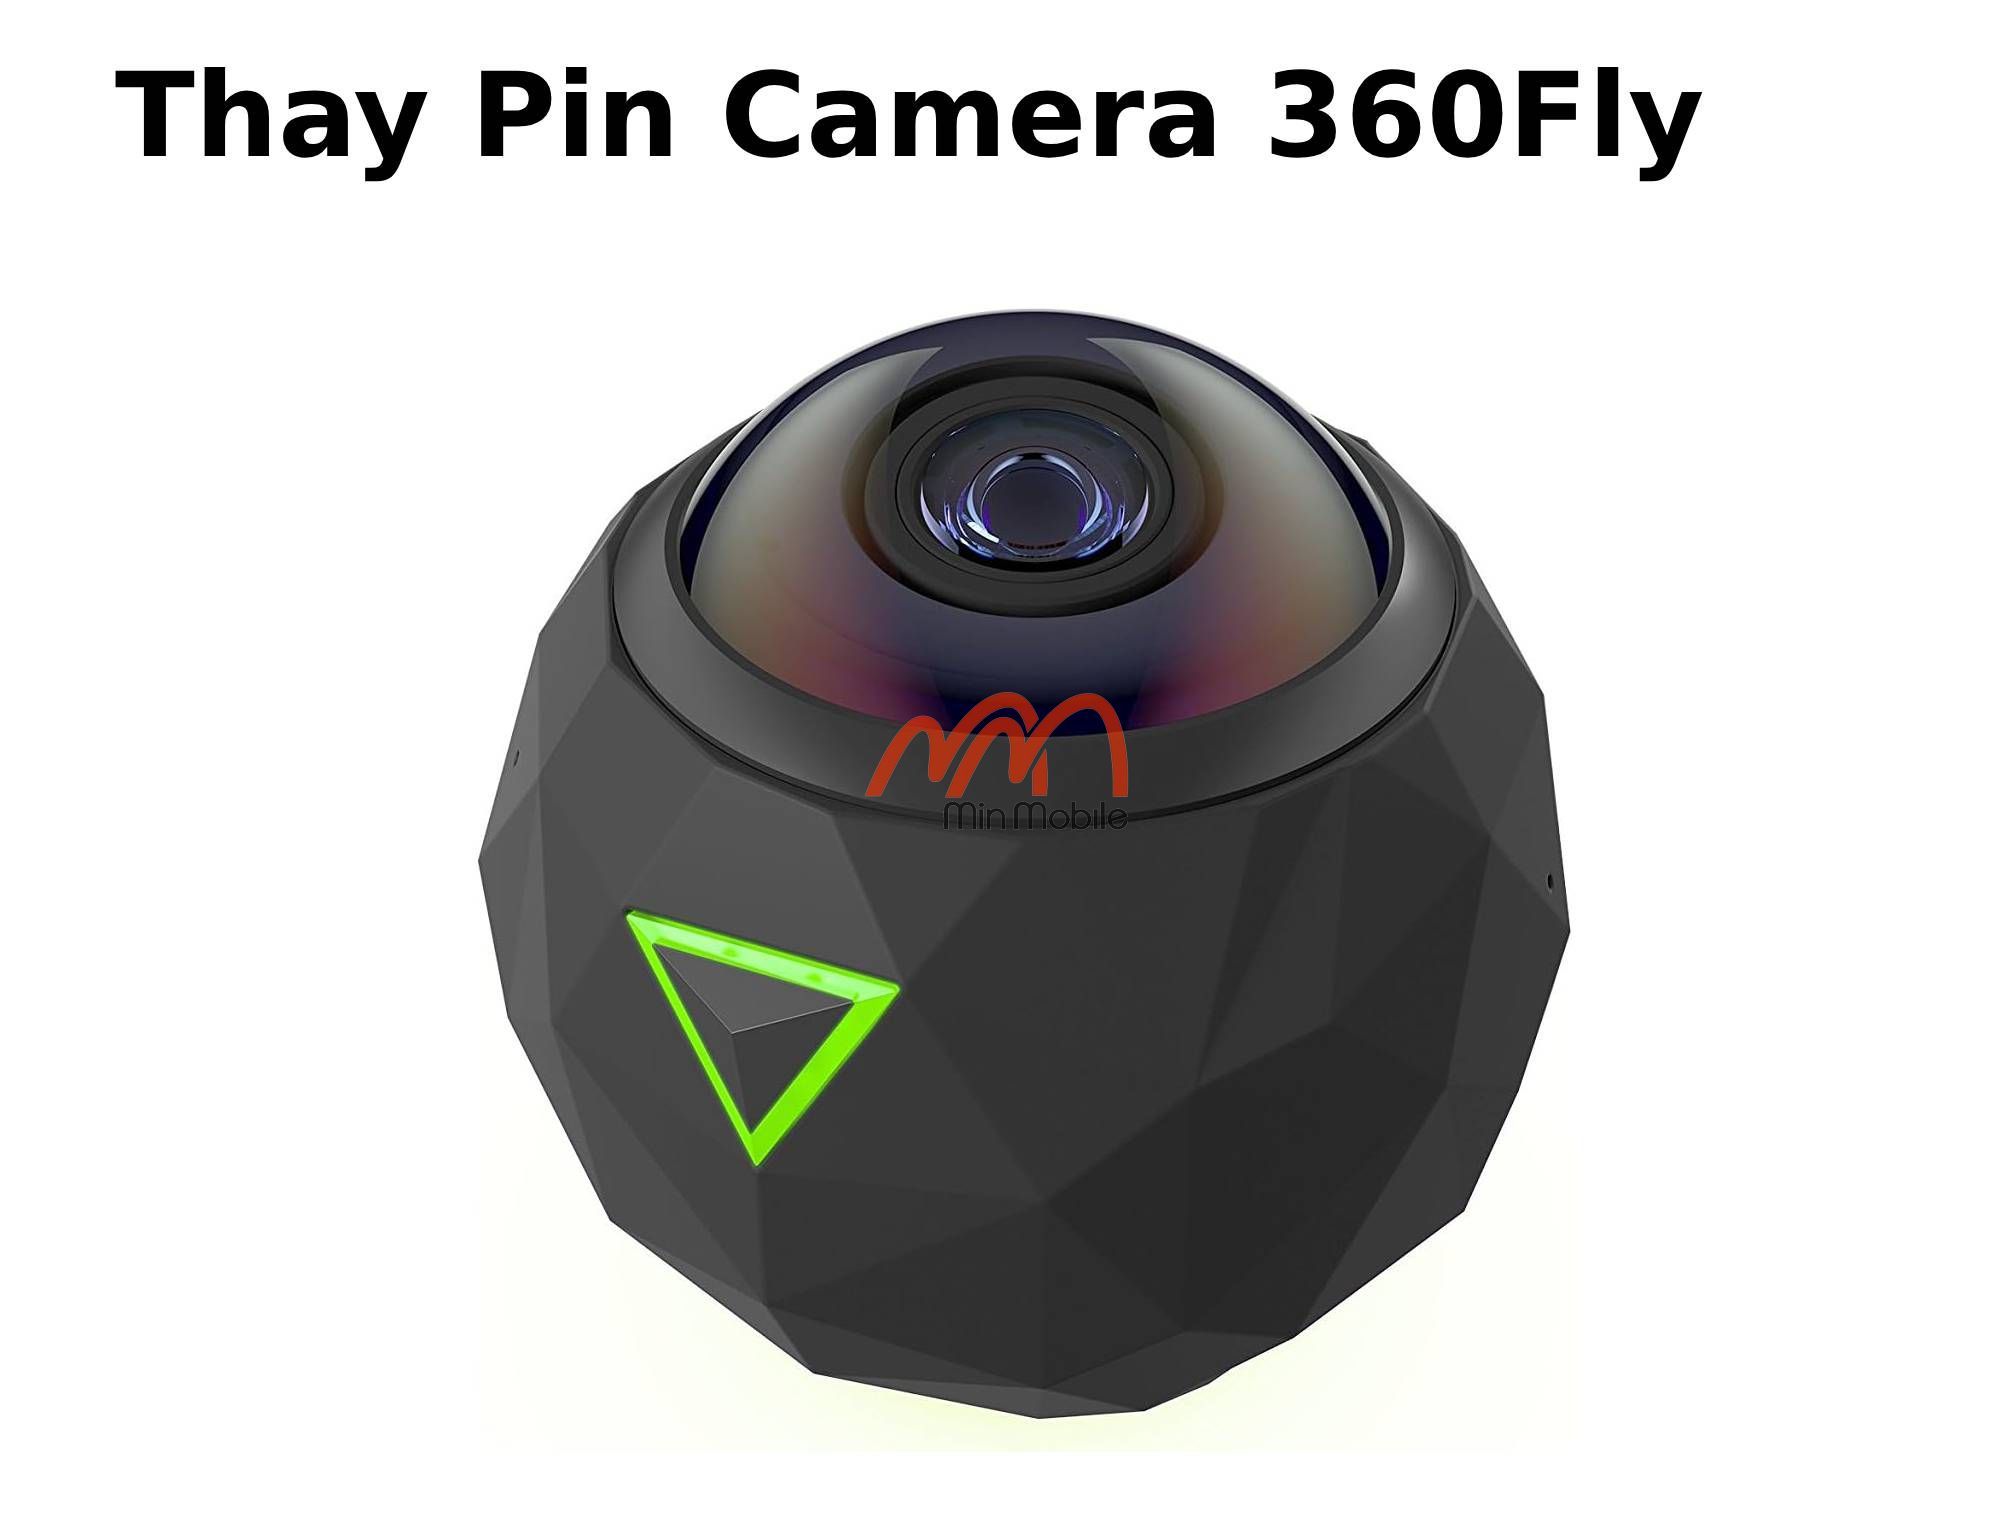 Thay Pin Camera 360Fly